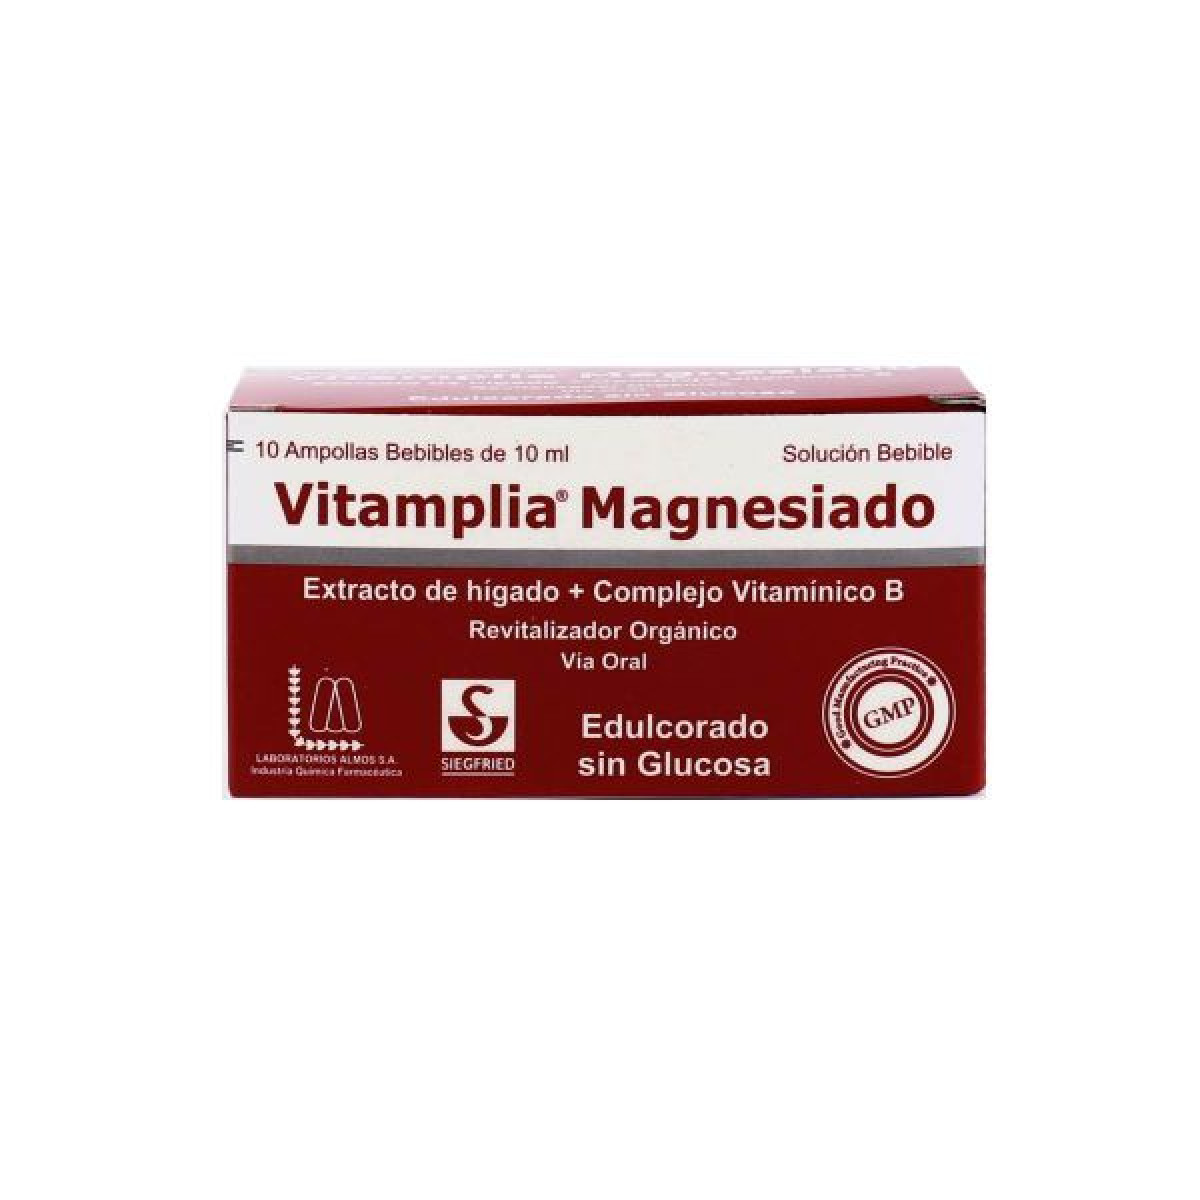 VITAMPLIA MAGNESIADO X 10 AMP BBLE